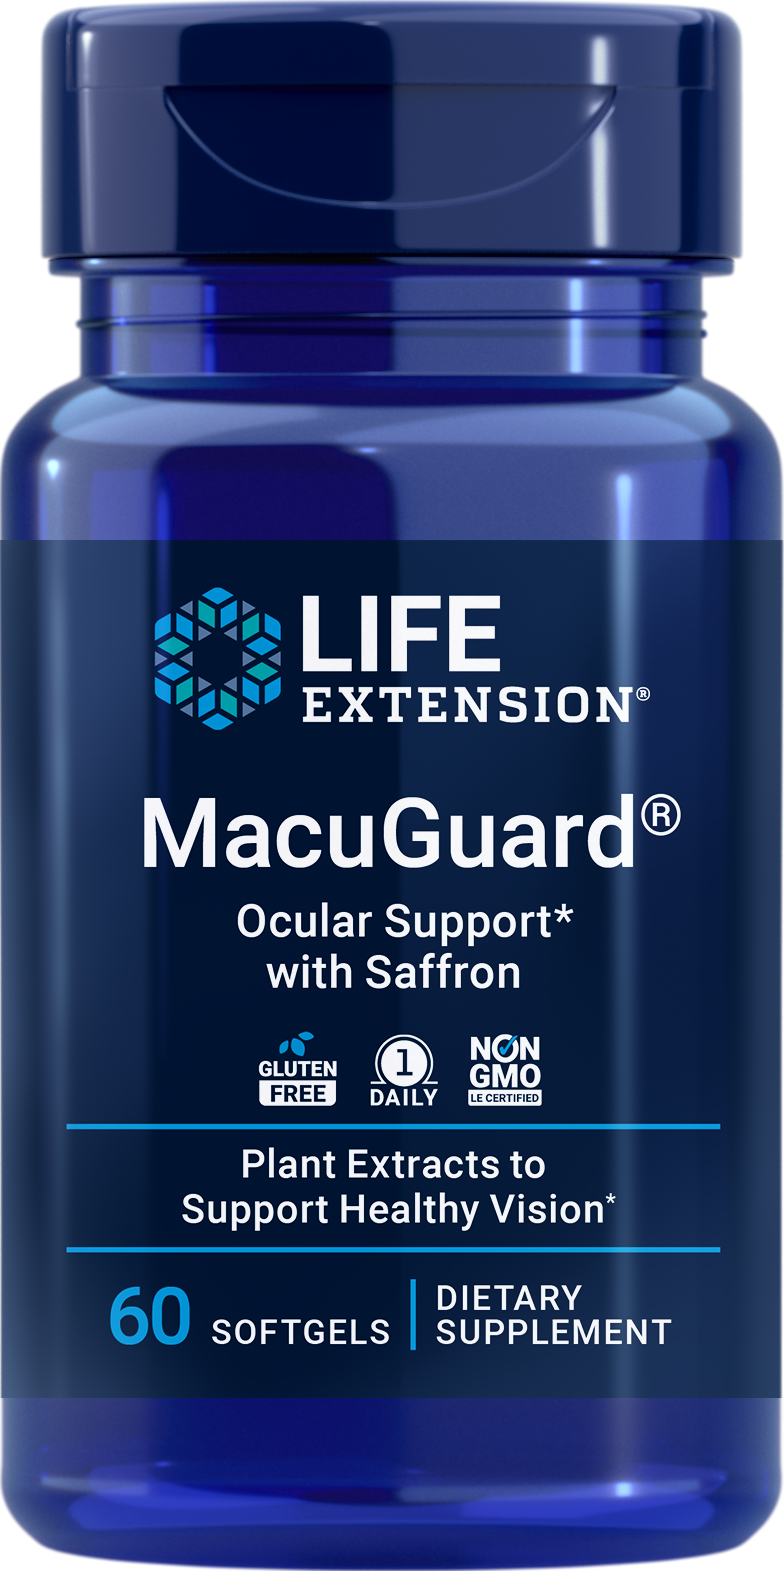 MacuGuard® Ocular Support